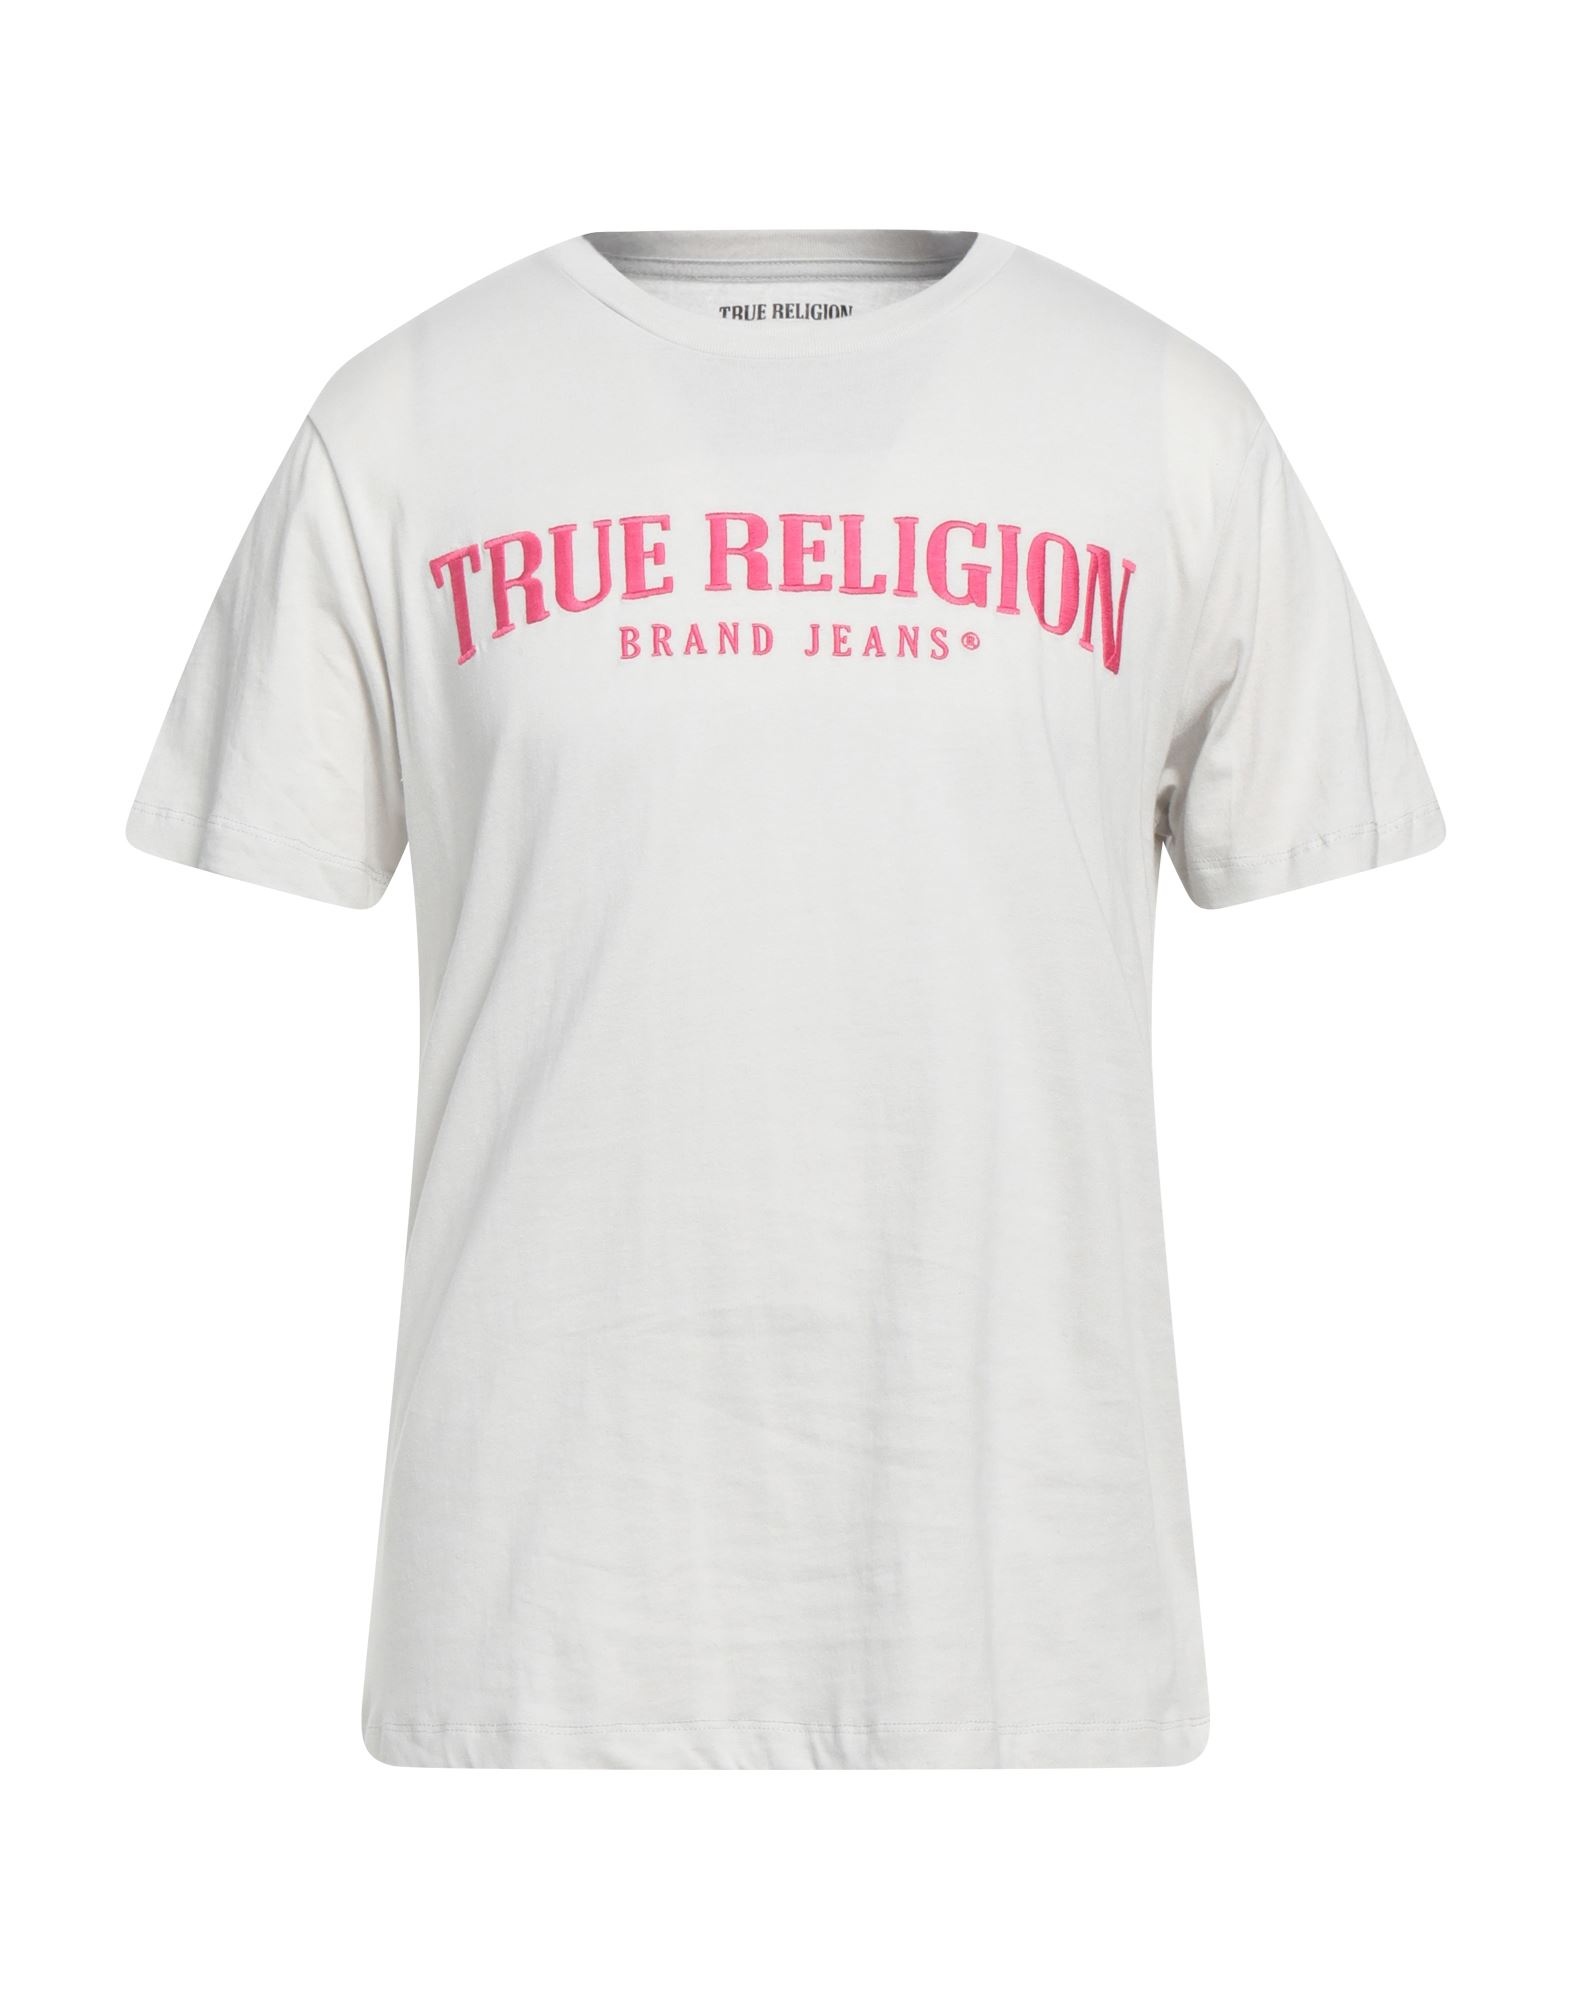 TRUE RELIGION TRUE RELIGION MAN T-SHIRT LIGHT GREY SIZE XXL COTTON